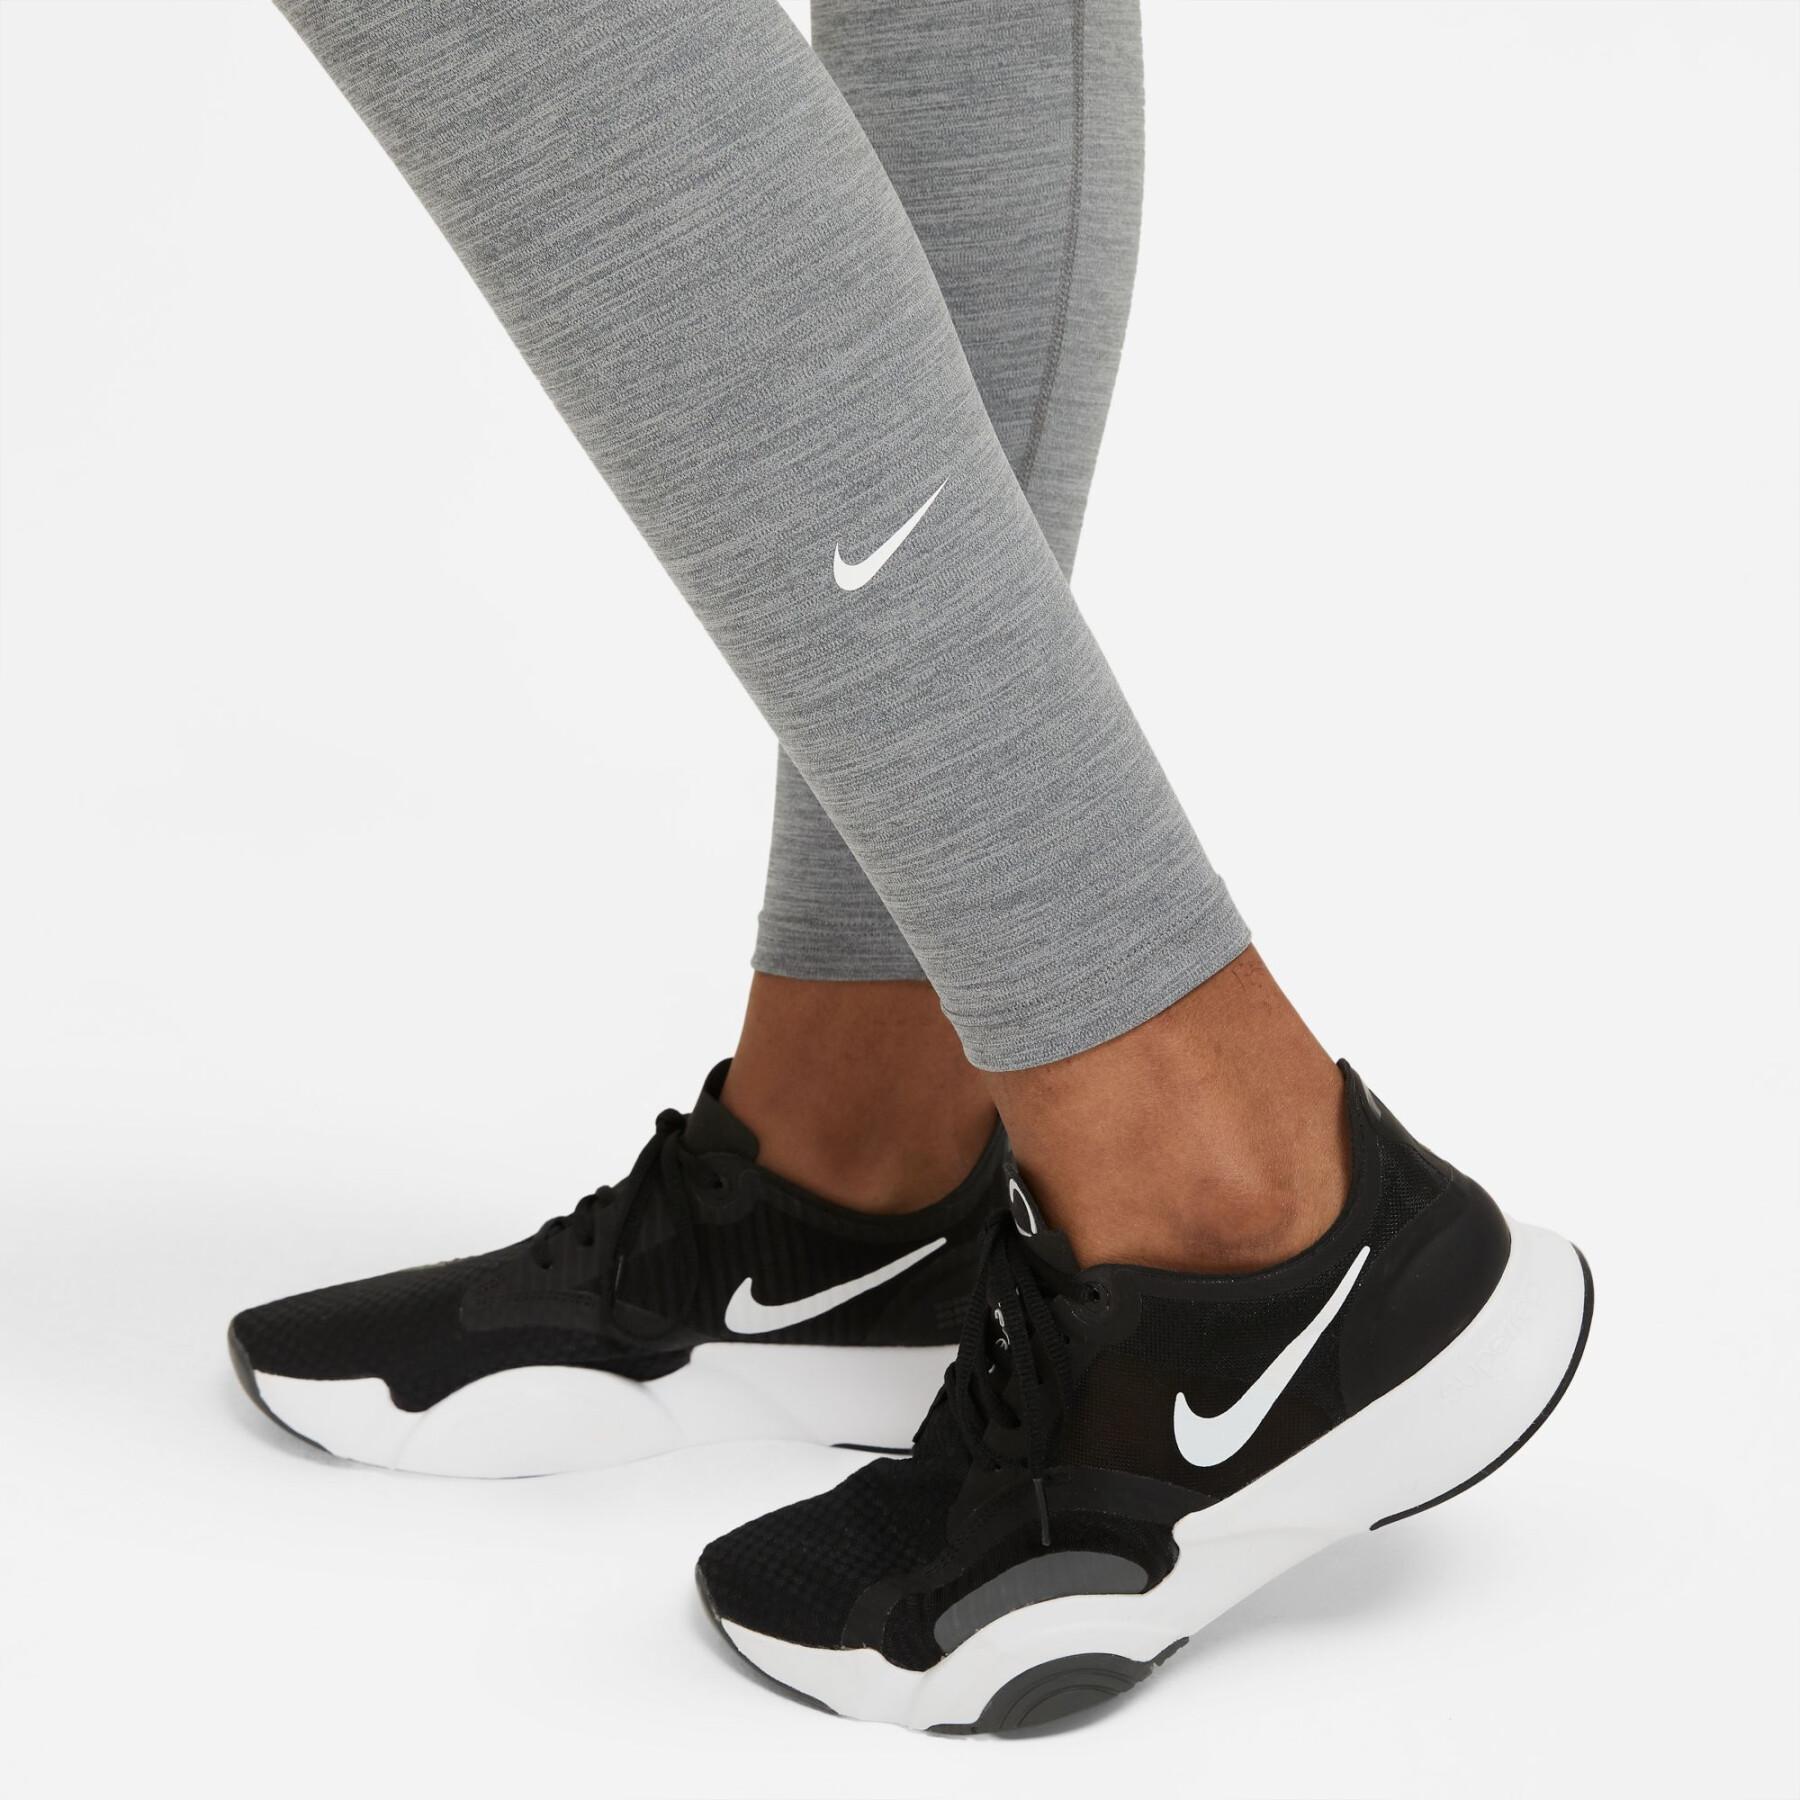 Leggings Damen Nike One